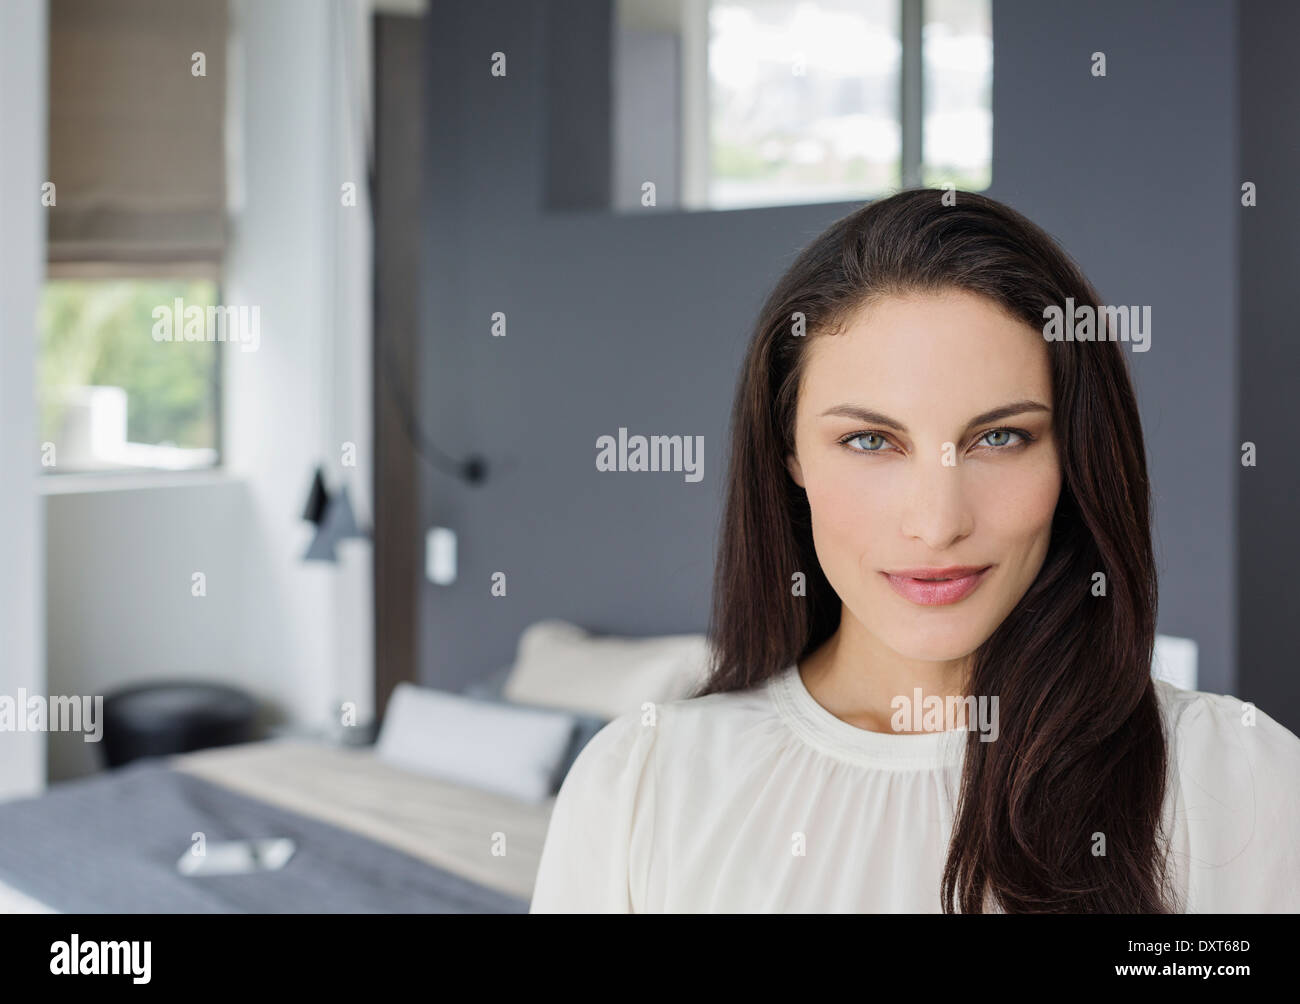 Portrait of confident woman in bedroom Stock Photo